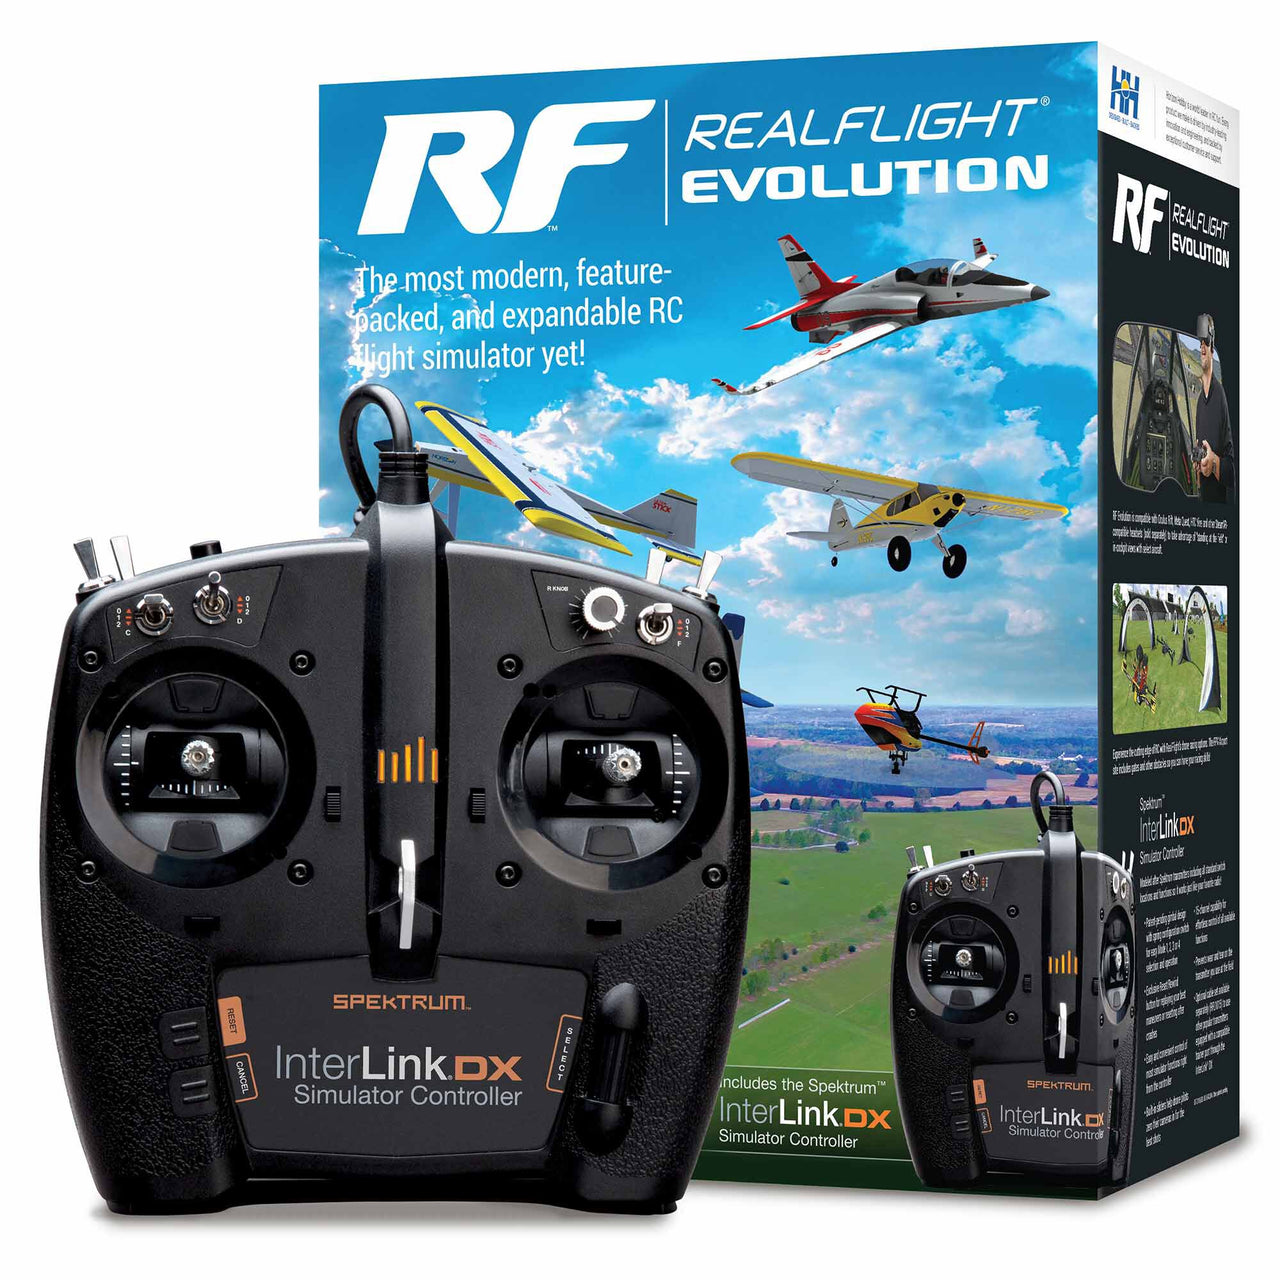 RFL2000 RealFlight Evolution RC Flight Simulator with InterLink DX Controller